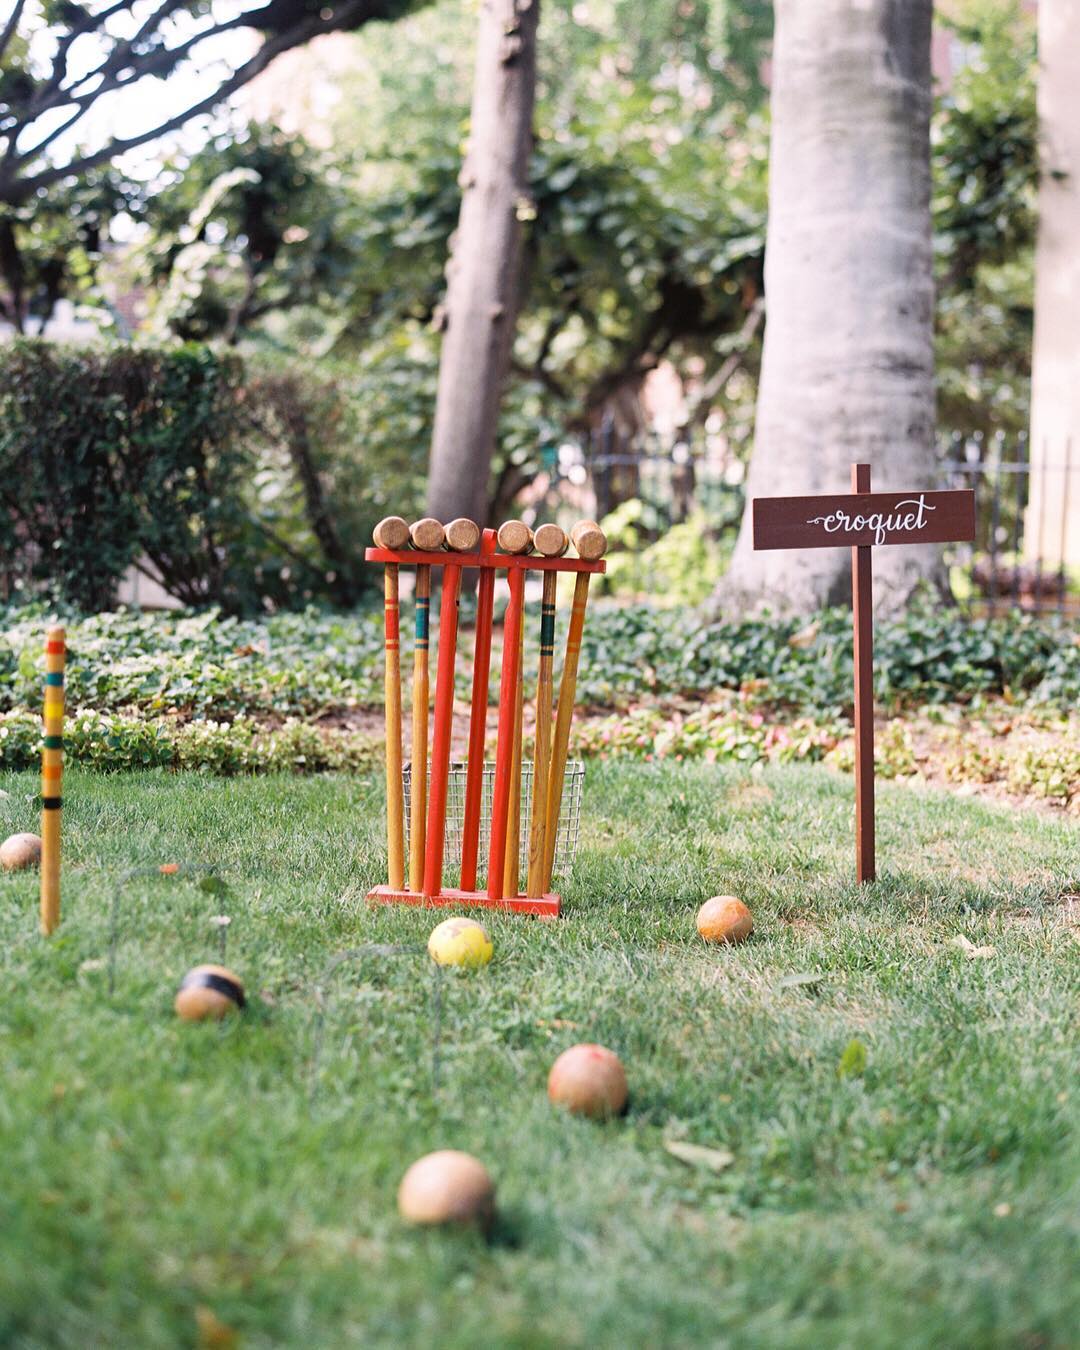 Croquet in backyard. Photo by Instagram user @laurynprattes